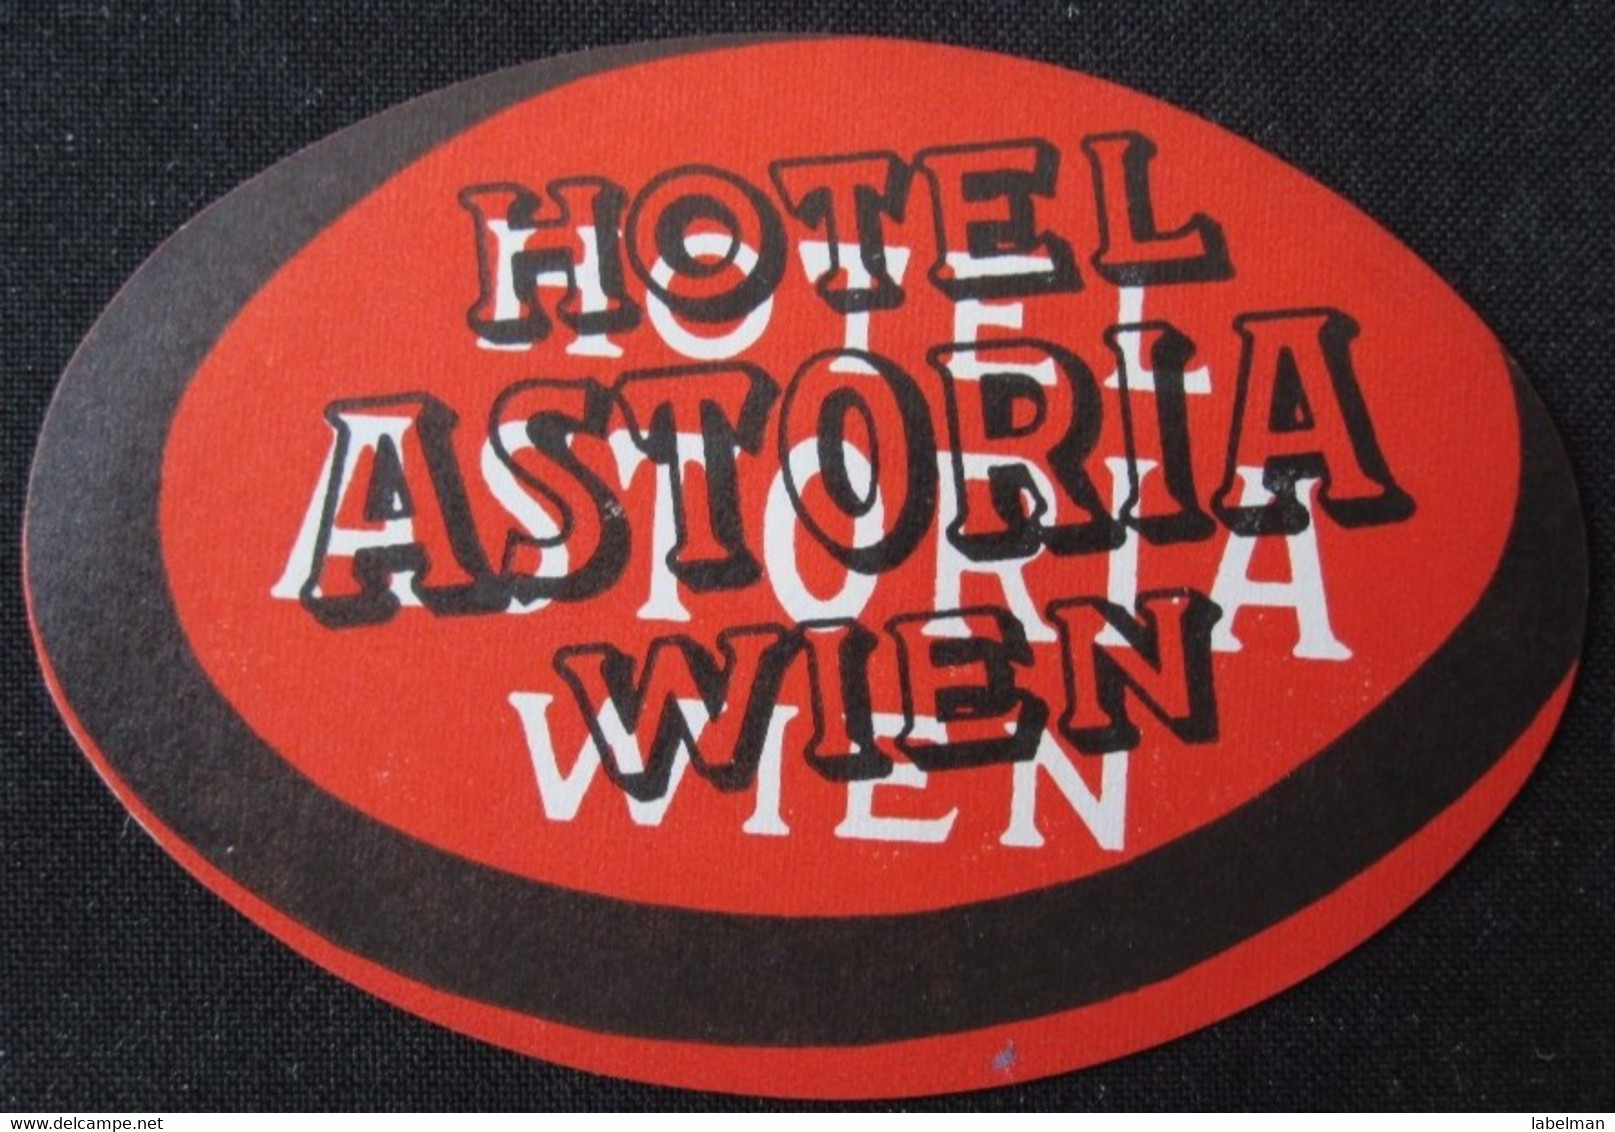 HOTEL MOTOR INN GASTHOF ERROR ASTORIA TIROL WIEN AUSTRIA STICKER DECAL LUGGAGE LABEL ETIQUETTE AUFKLEBER - Etiquettes D'hotels